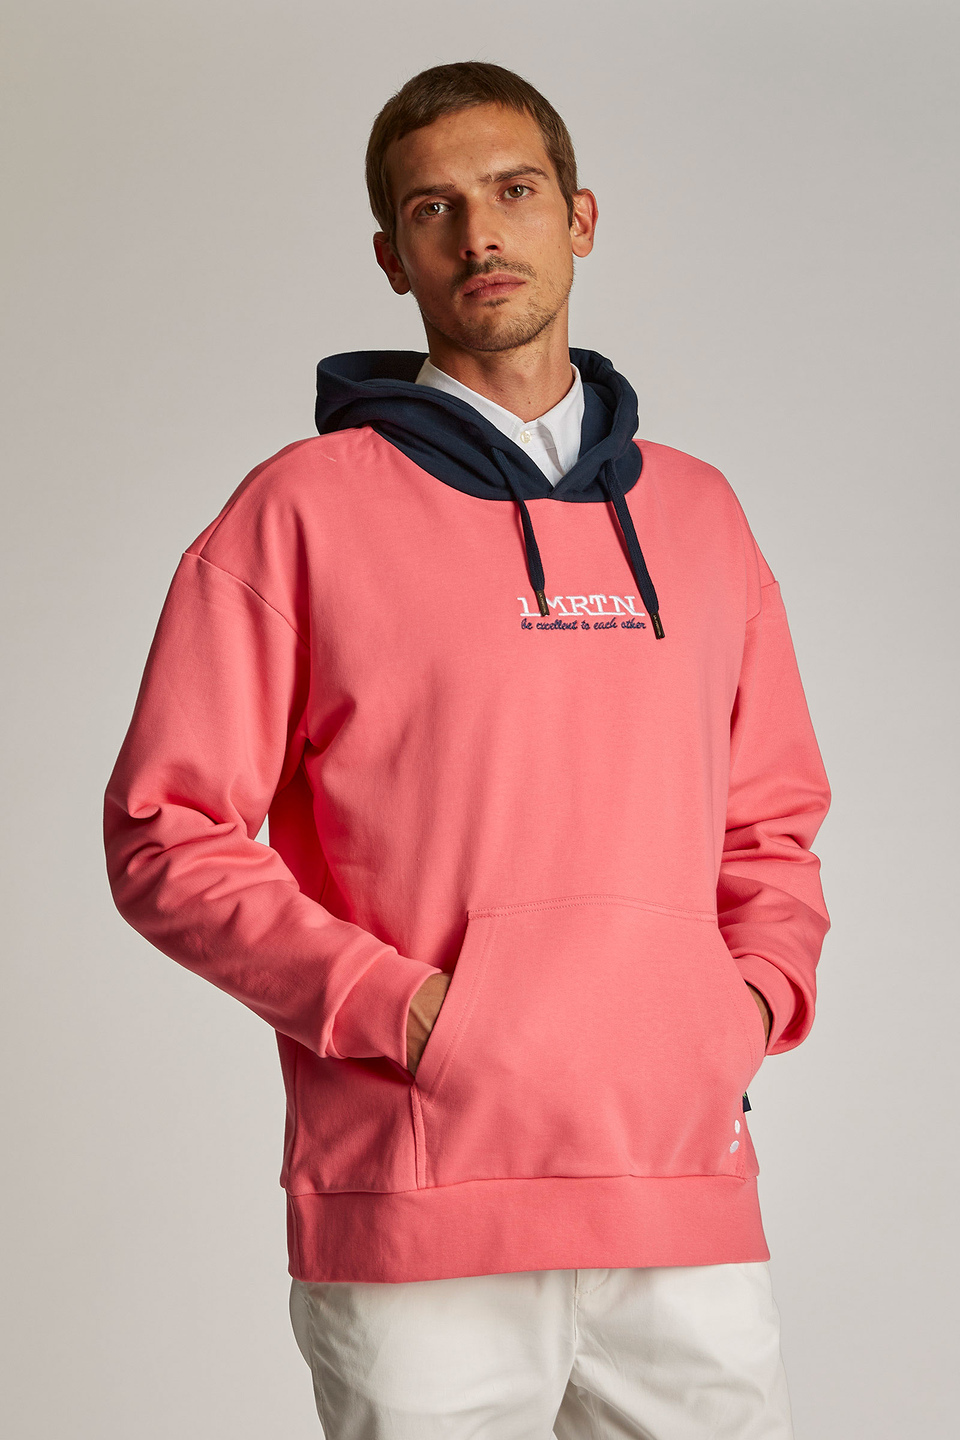 Herren-Sweatshirt aus 100 % Baumwolle mit einer Kapuze in Kontrastoptik, oversized Modell | La Martina - Official Online Shop